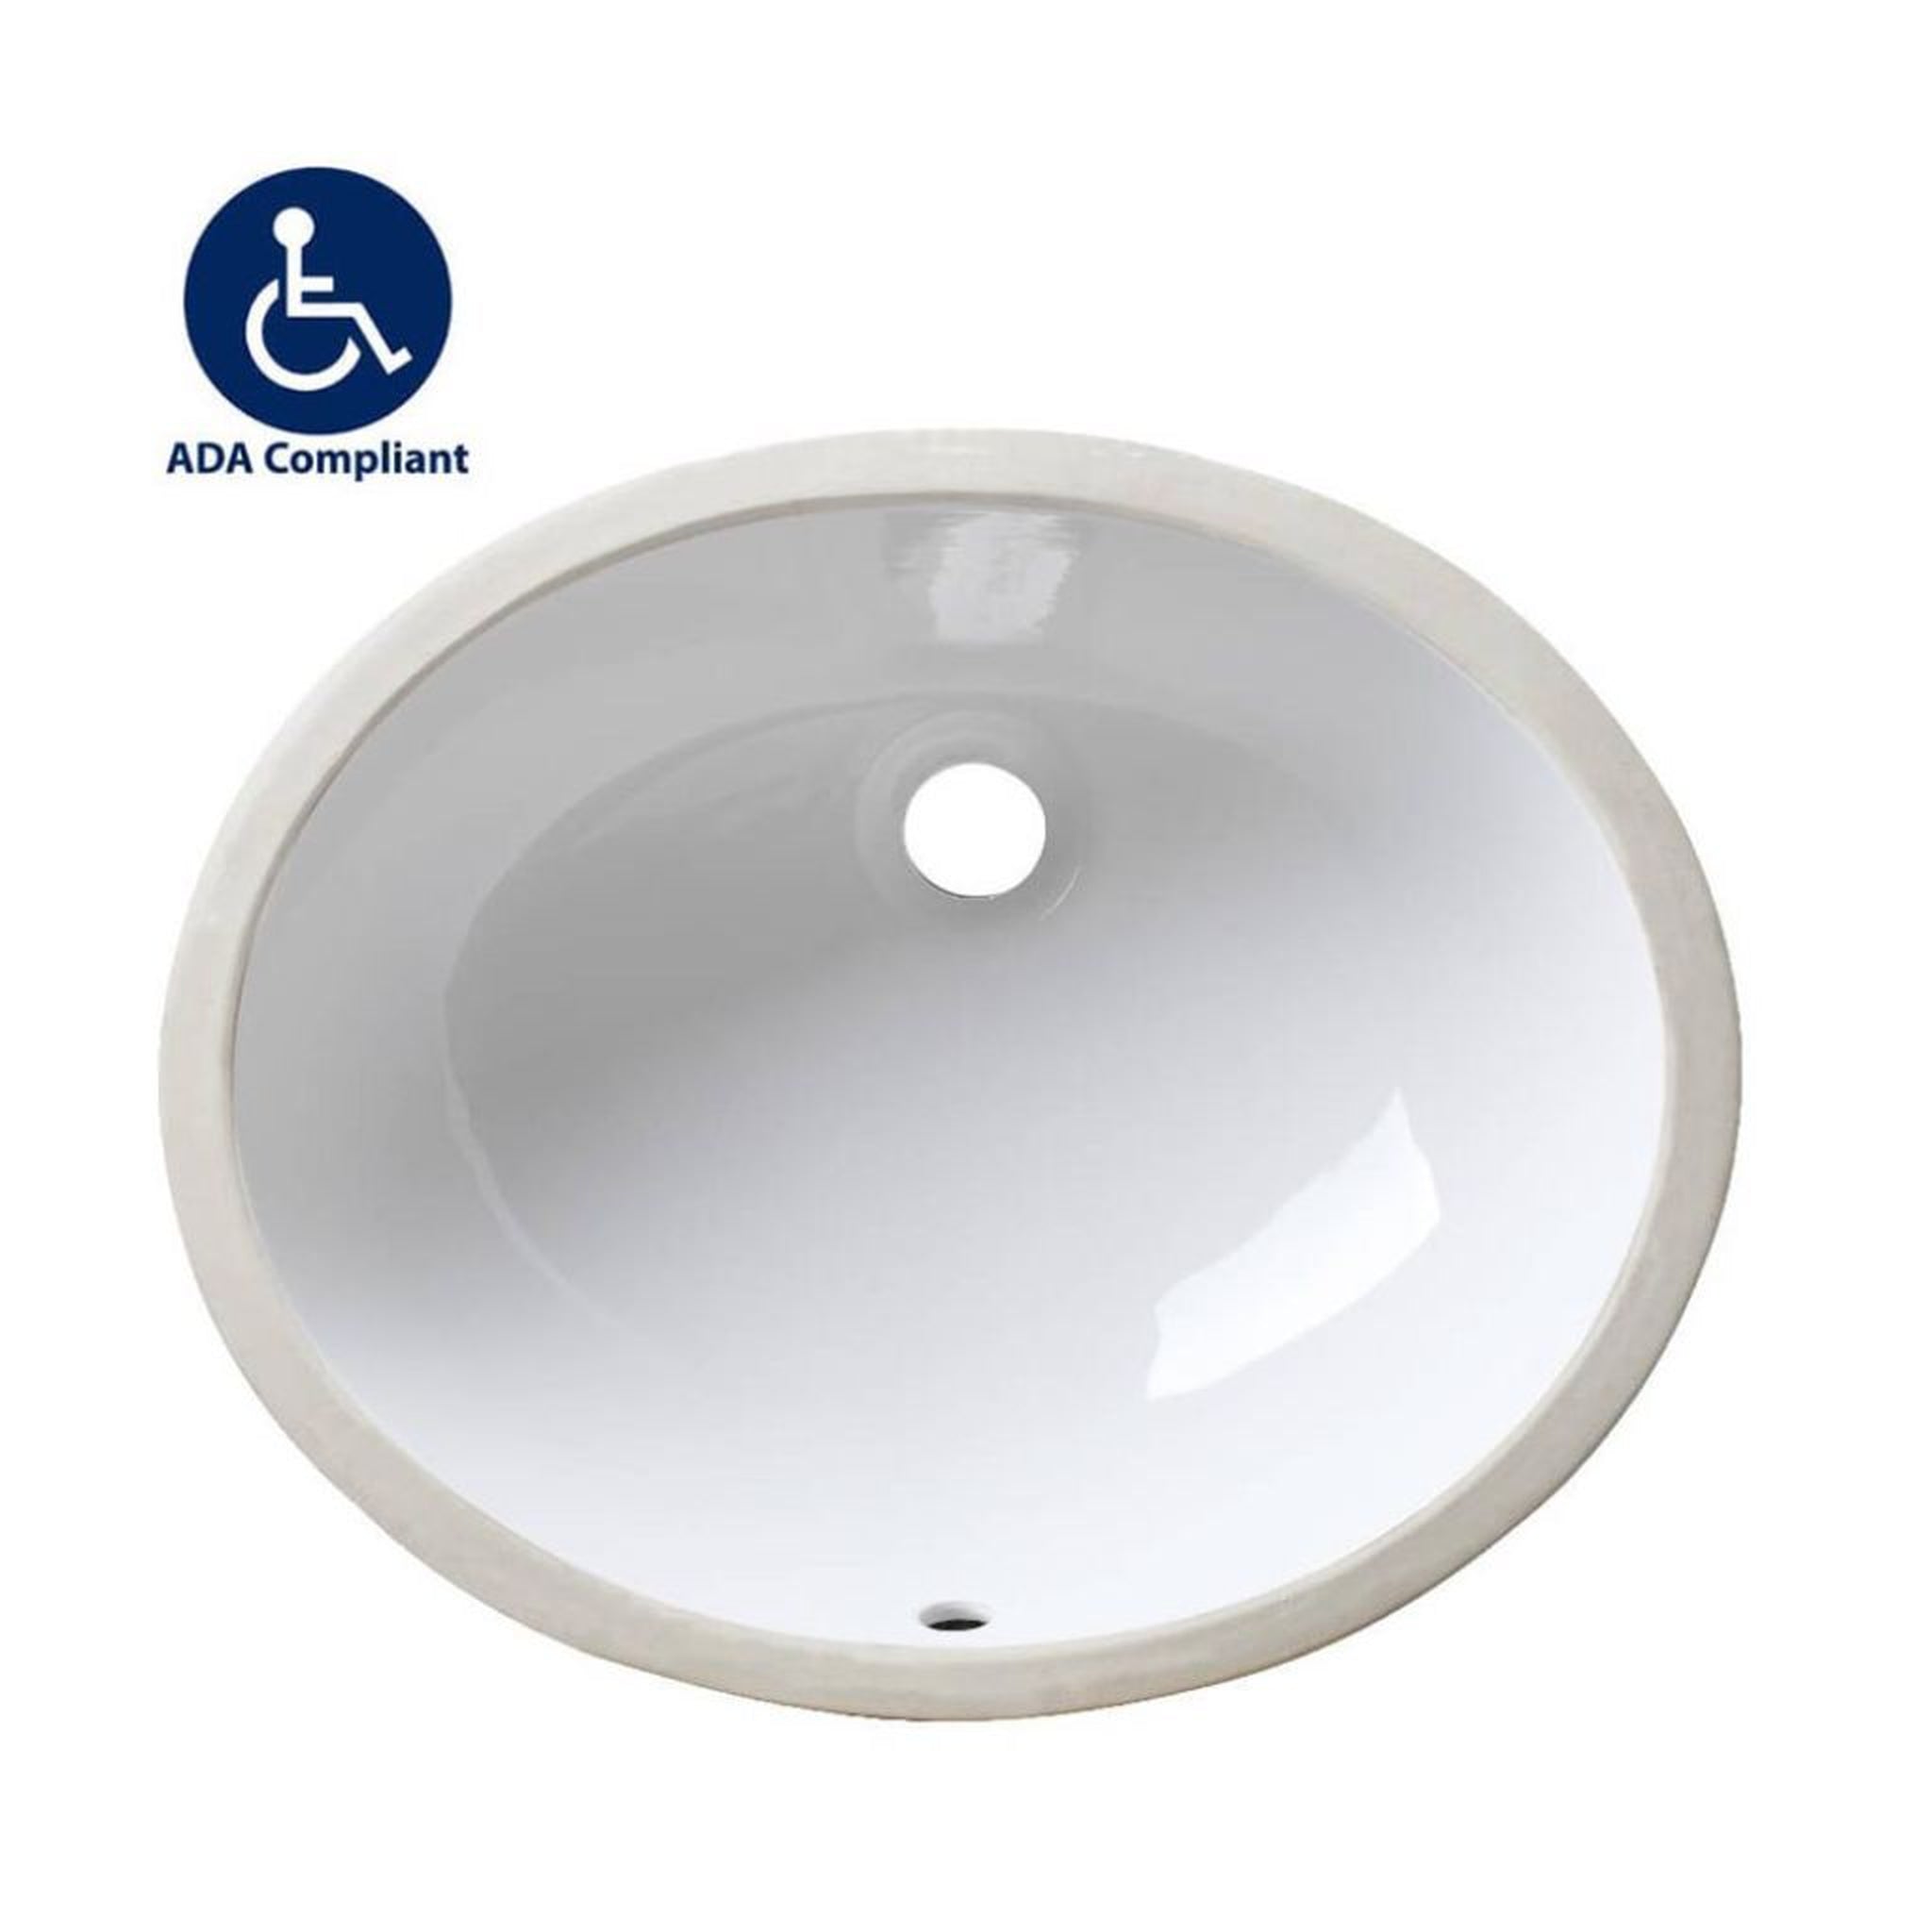 Allora USA, Allora USA 19.5" X 16" ADA Compliant Ceramic White Oval Undermount Sink With Overflow